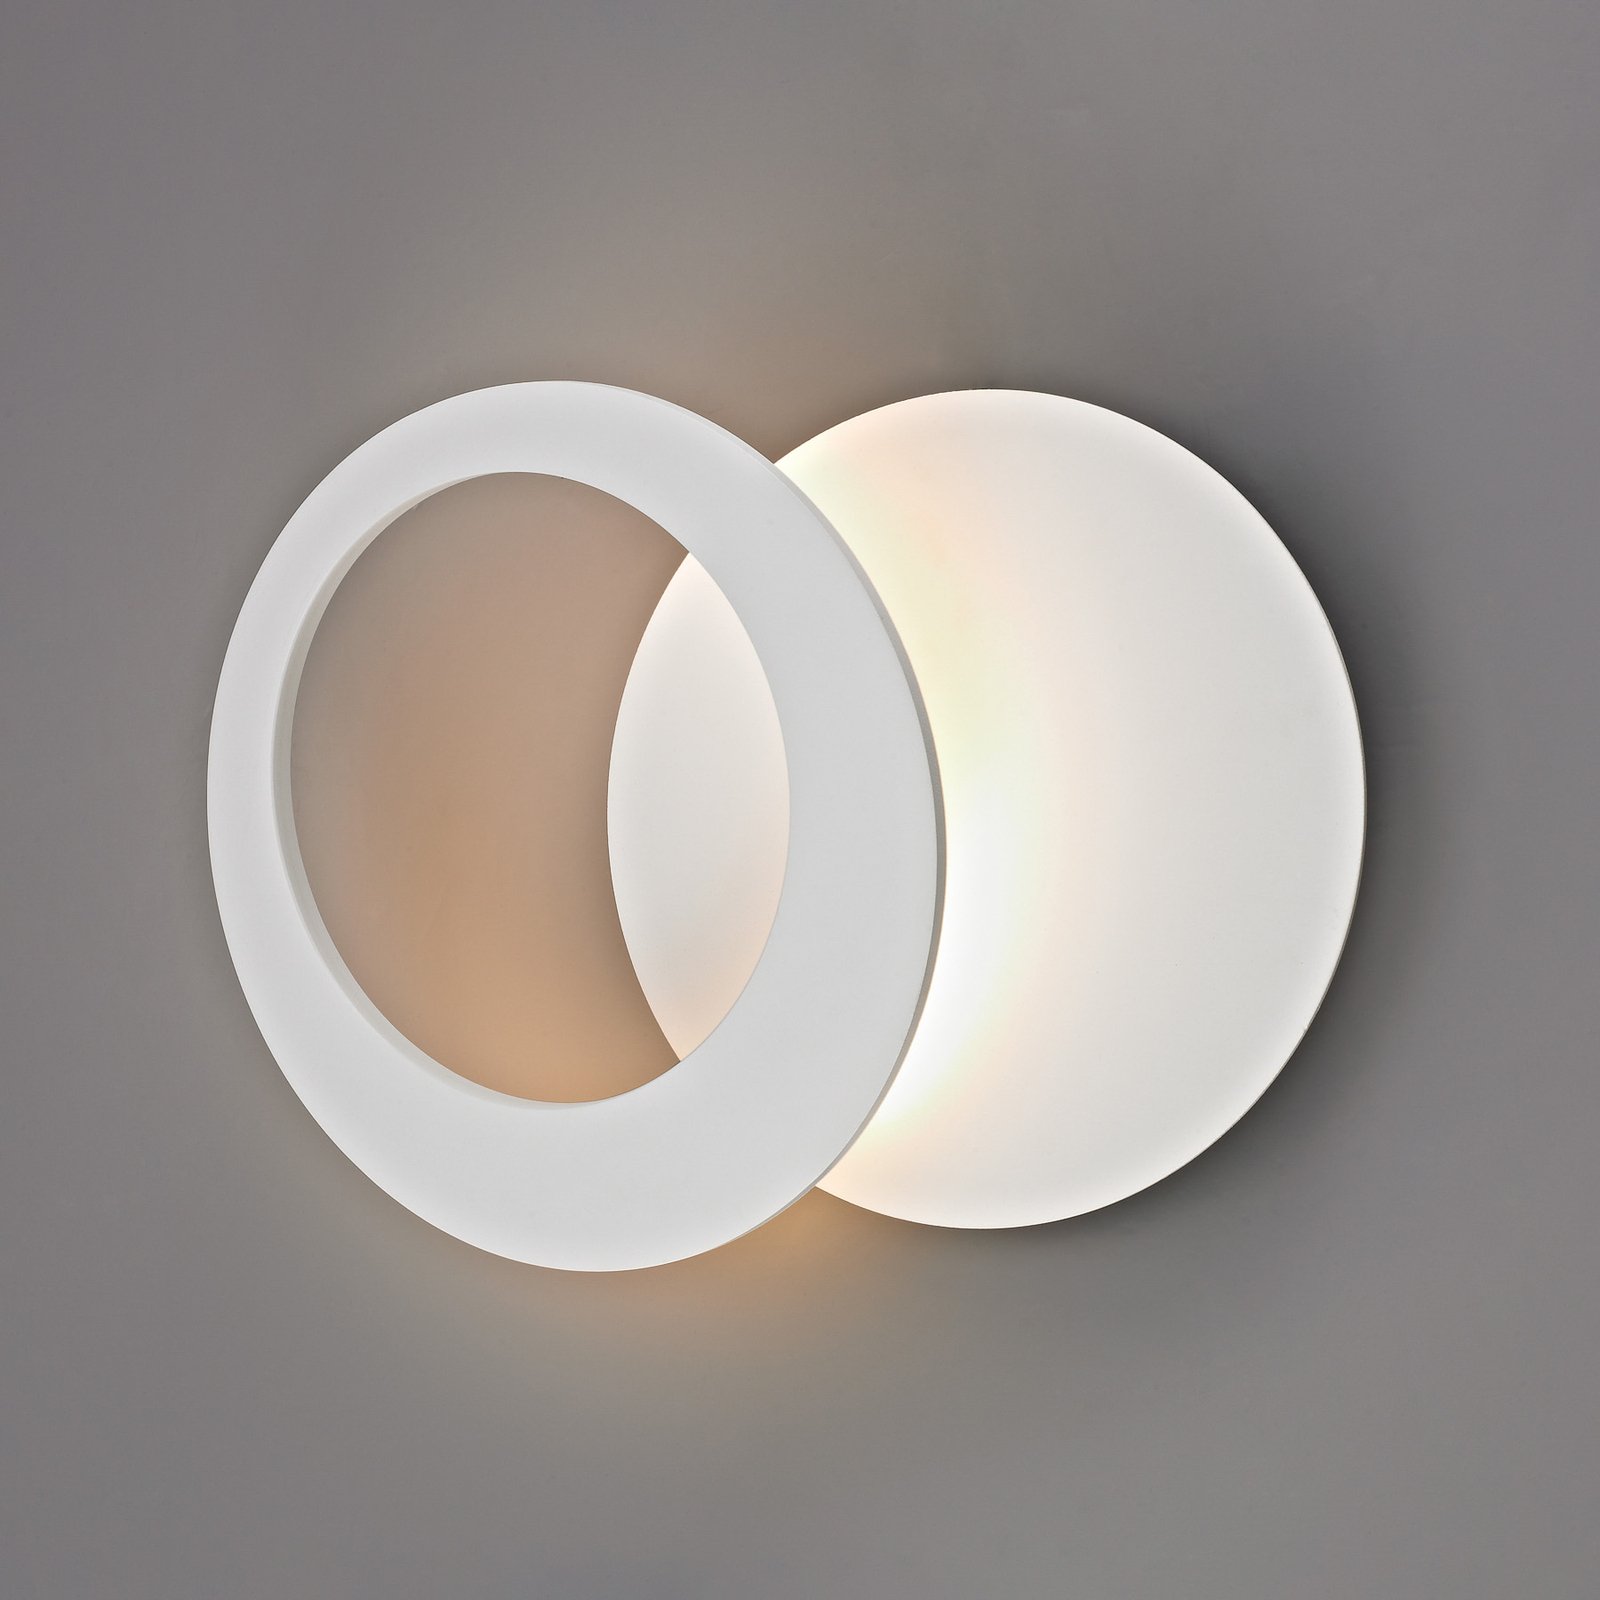 LED-vägglampa Toronto, vit, Ø 26 cm, aluminium, justerbar